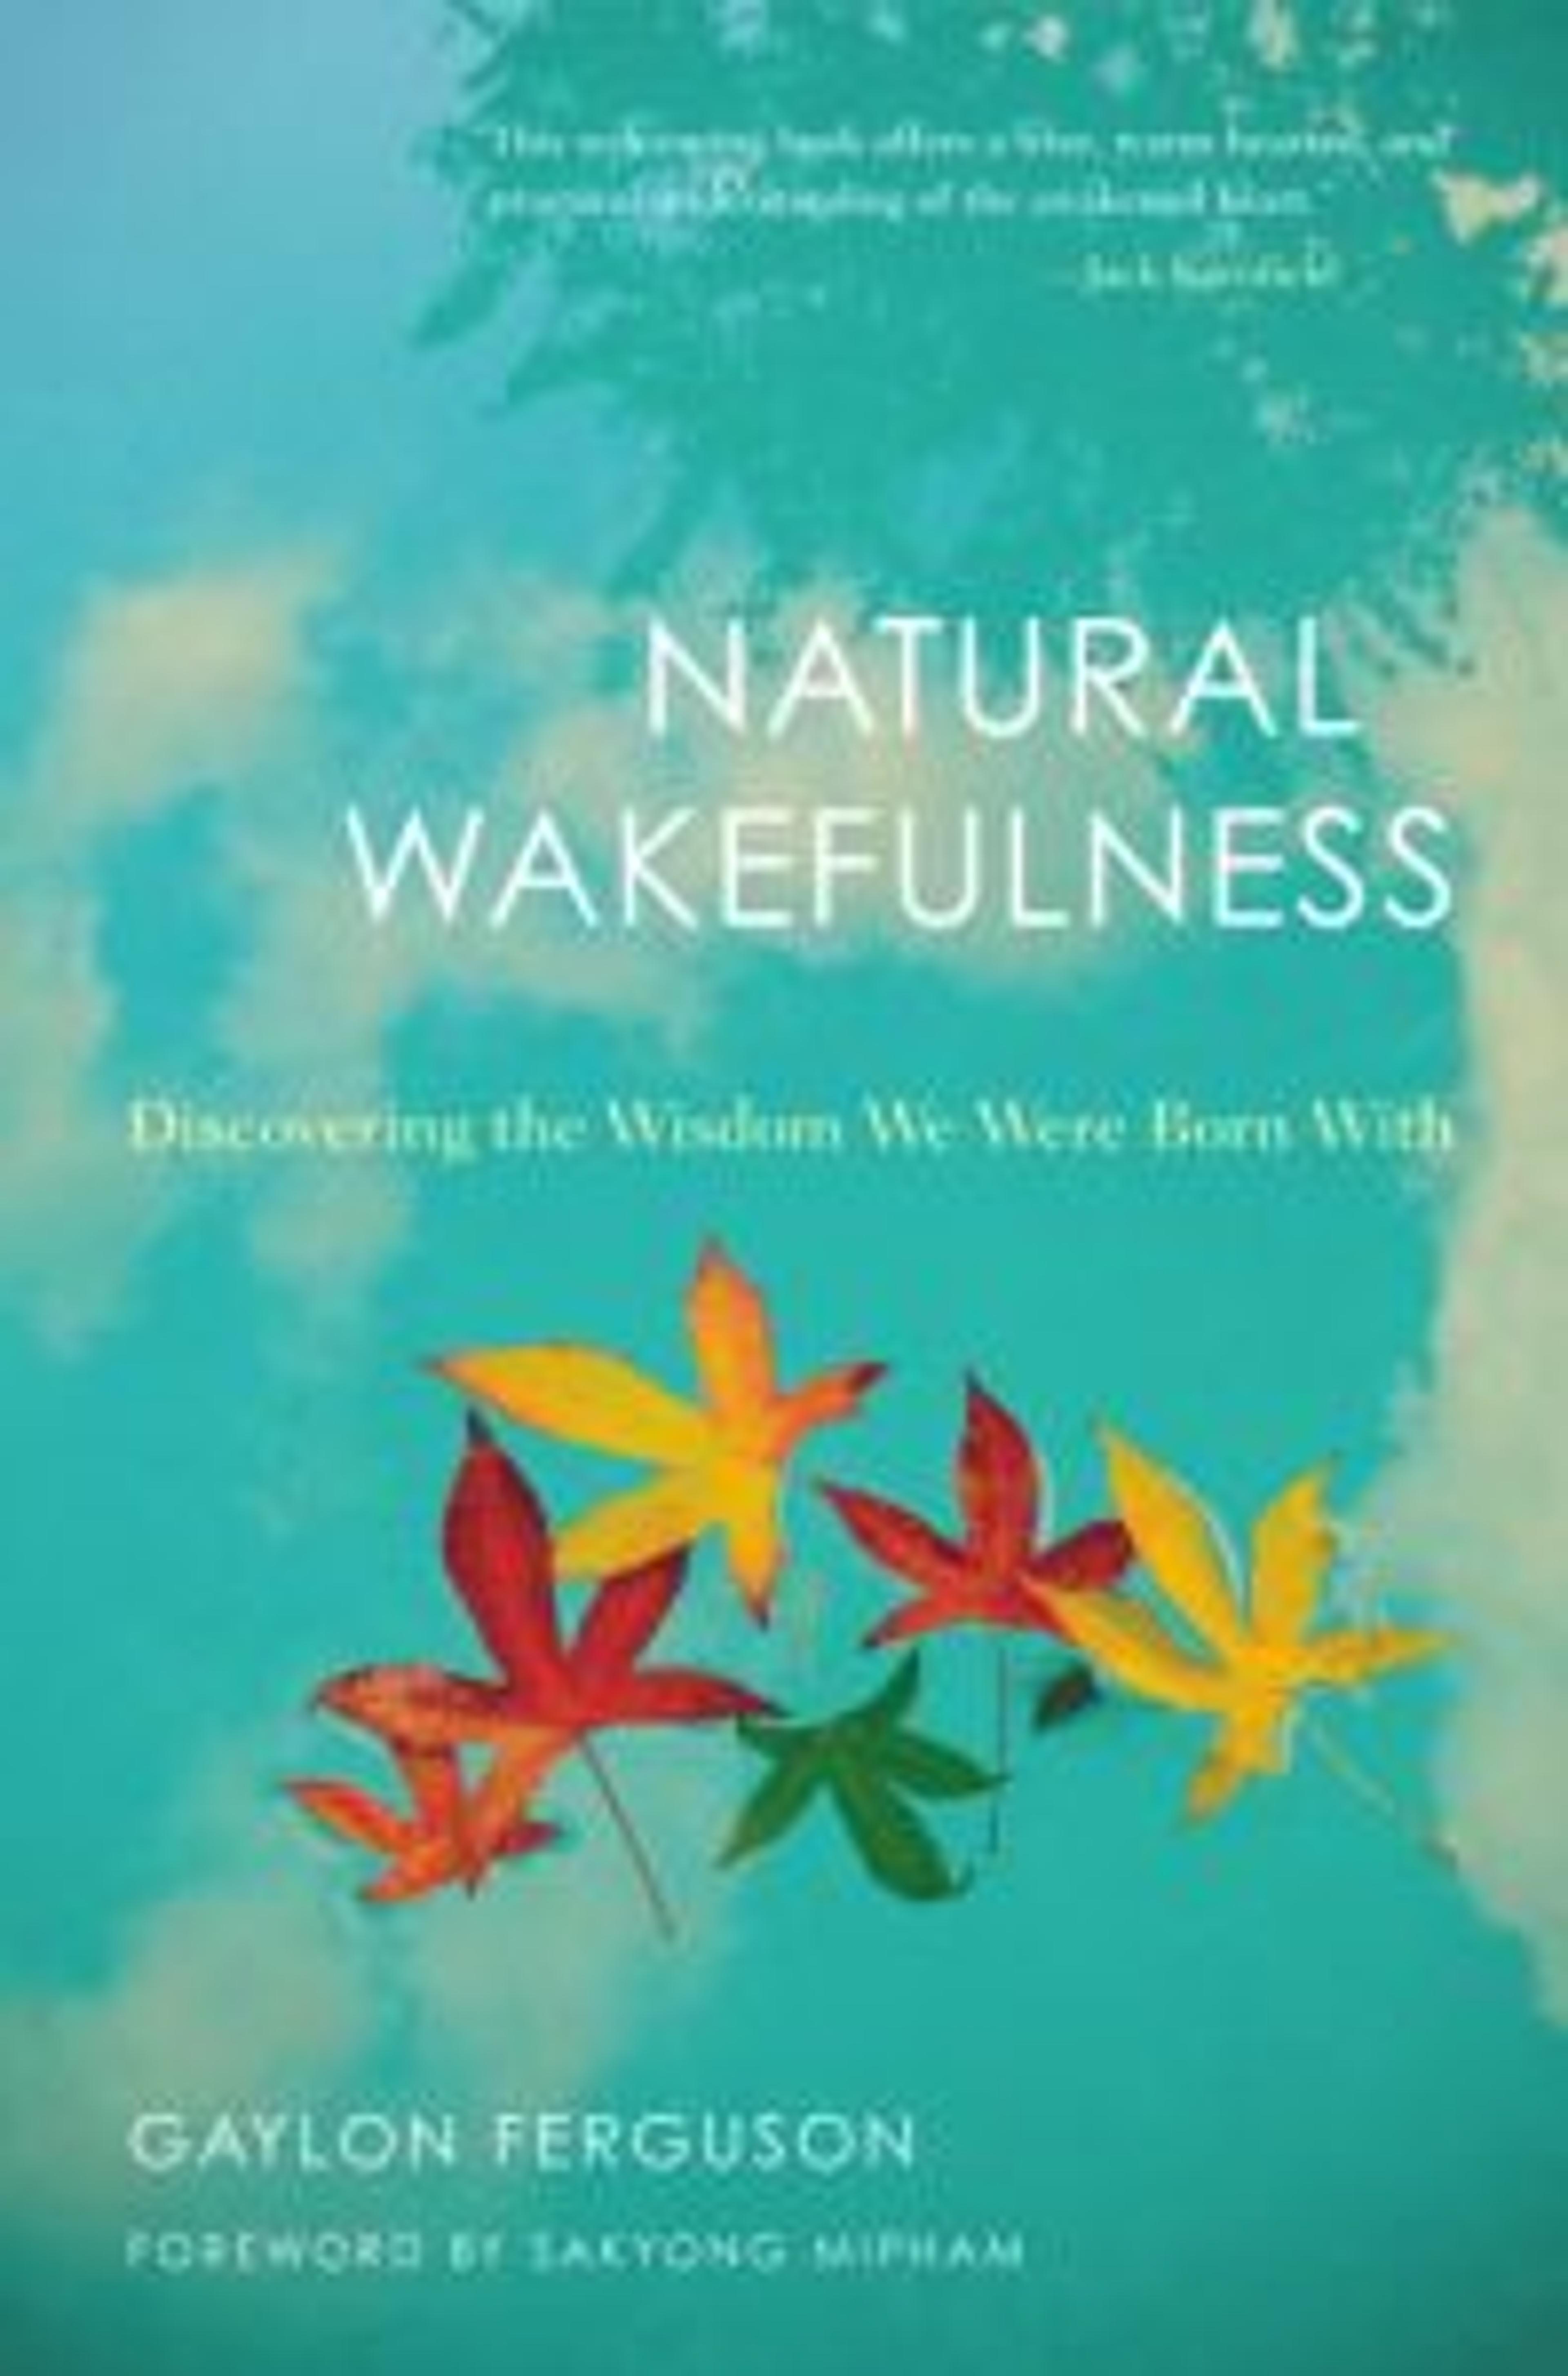 Natural Wakefulness, by Gaylon Ferguson